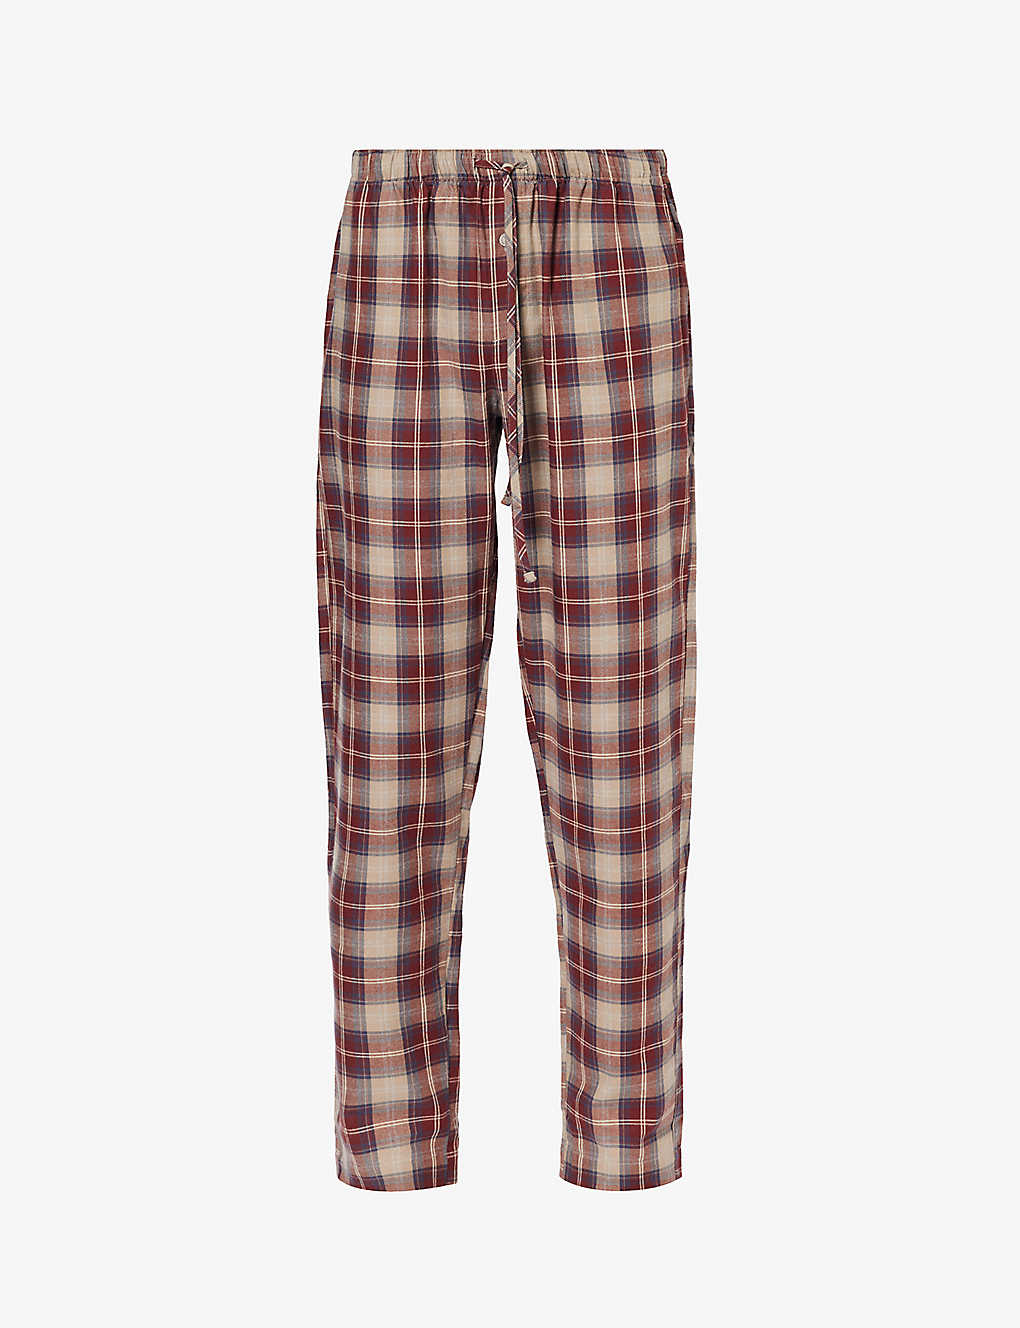 Shop Hanro Men's Homey Check Checked Regular-fit Straight-leg Cotton Pyjama Bottoms